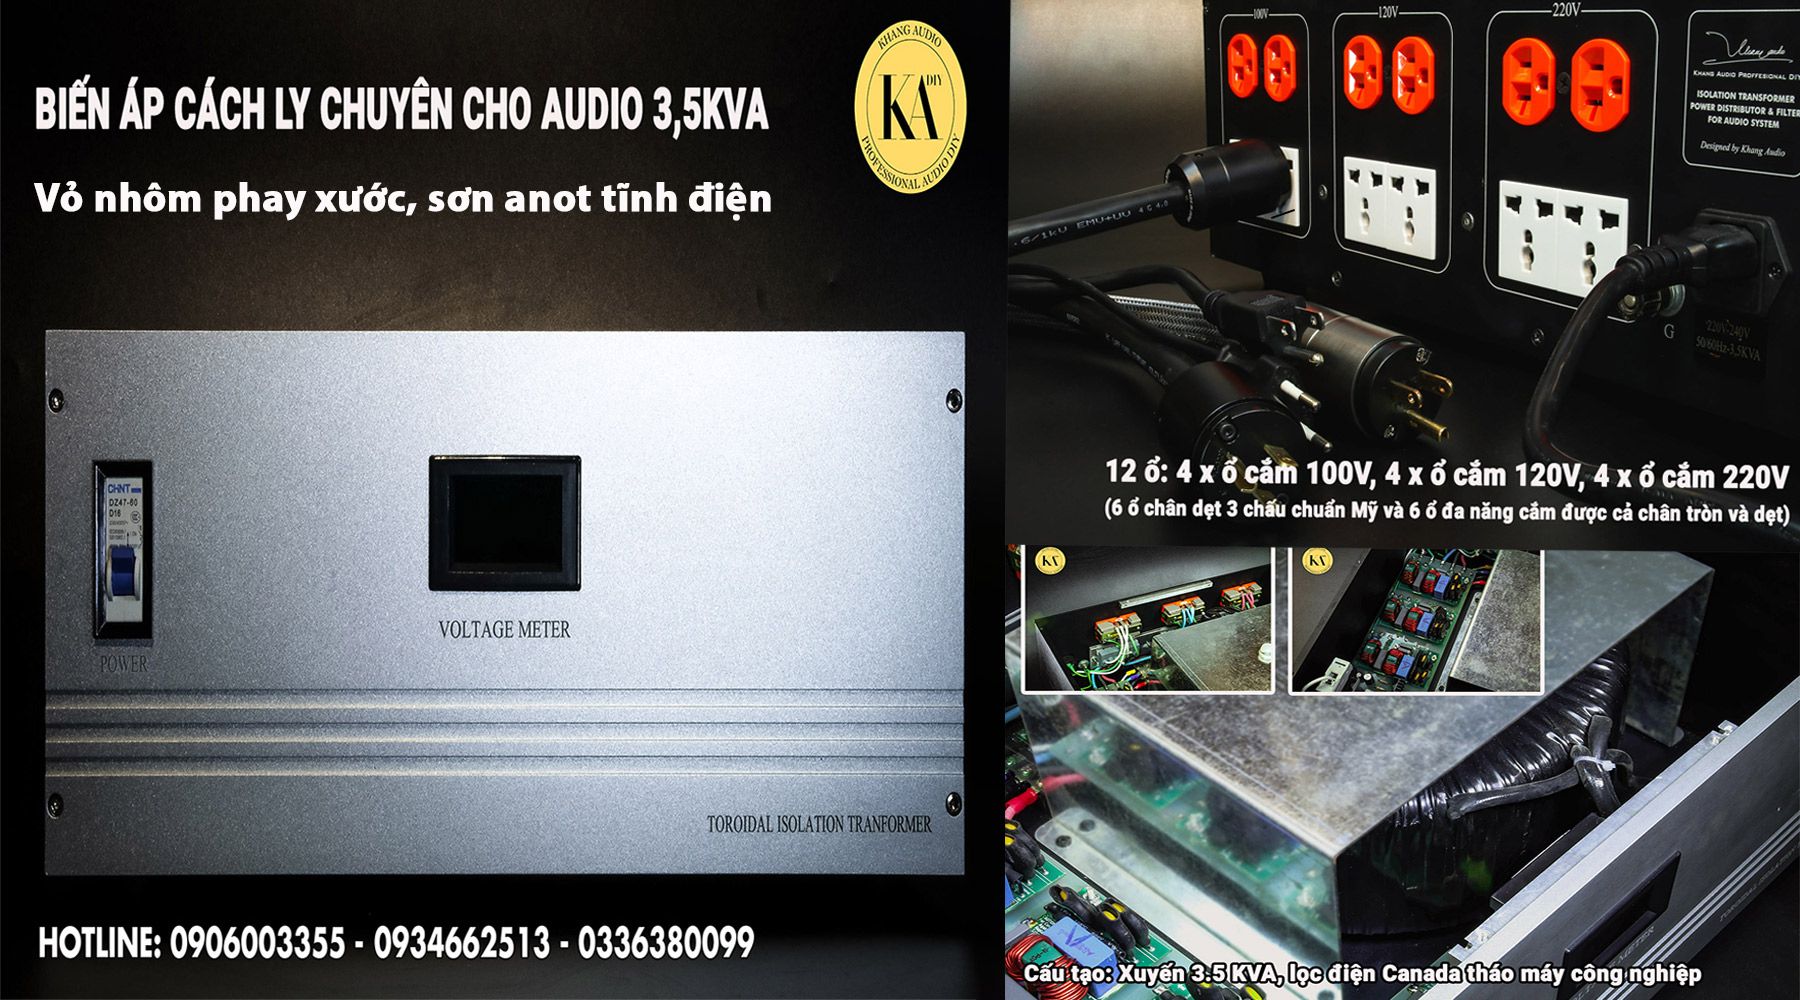 Biến Áp Cách Ly Xuyến CBN 3.5KVA (100V - 120V - 220V) Khang Audio 0336380099